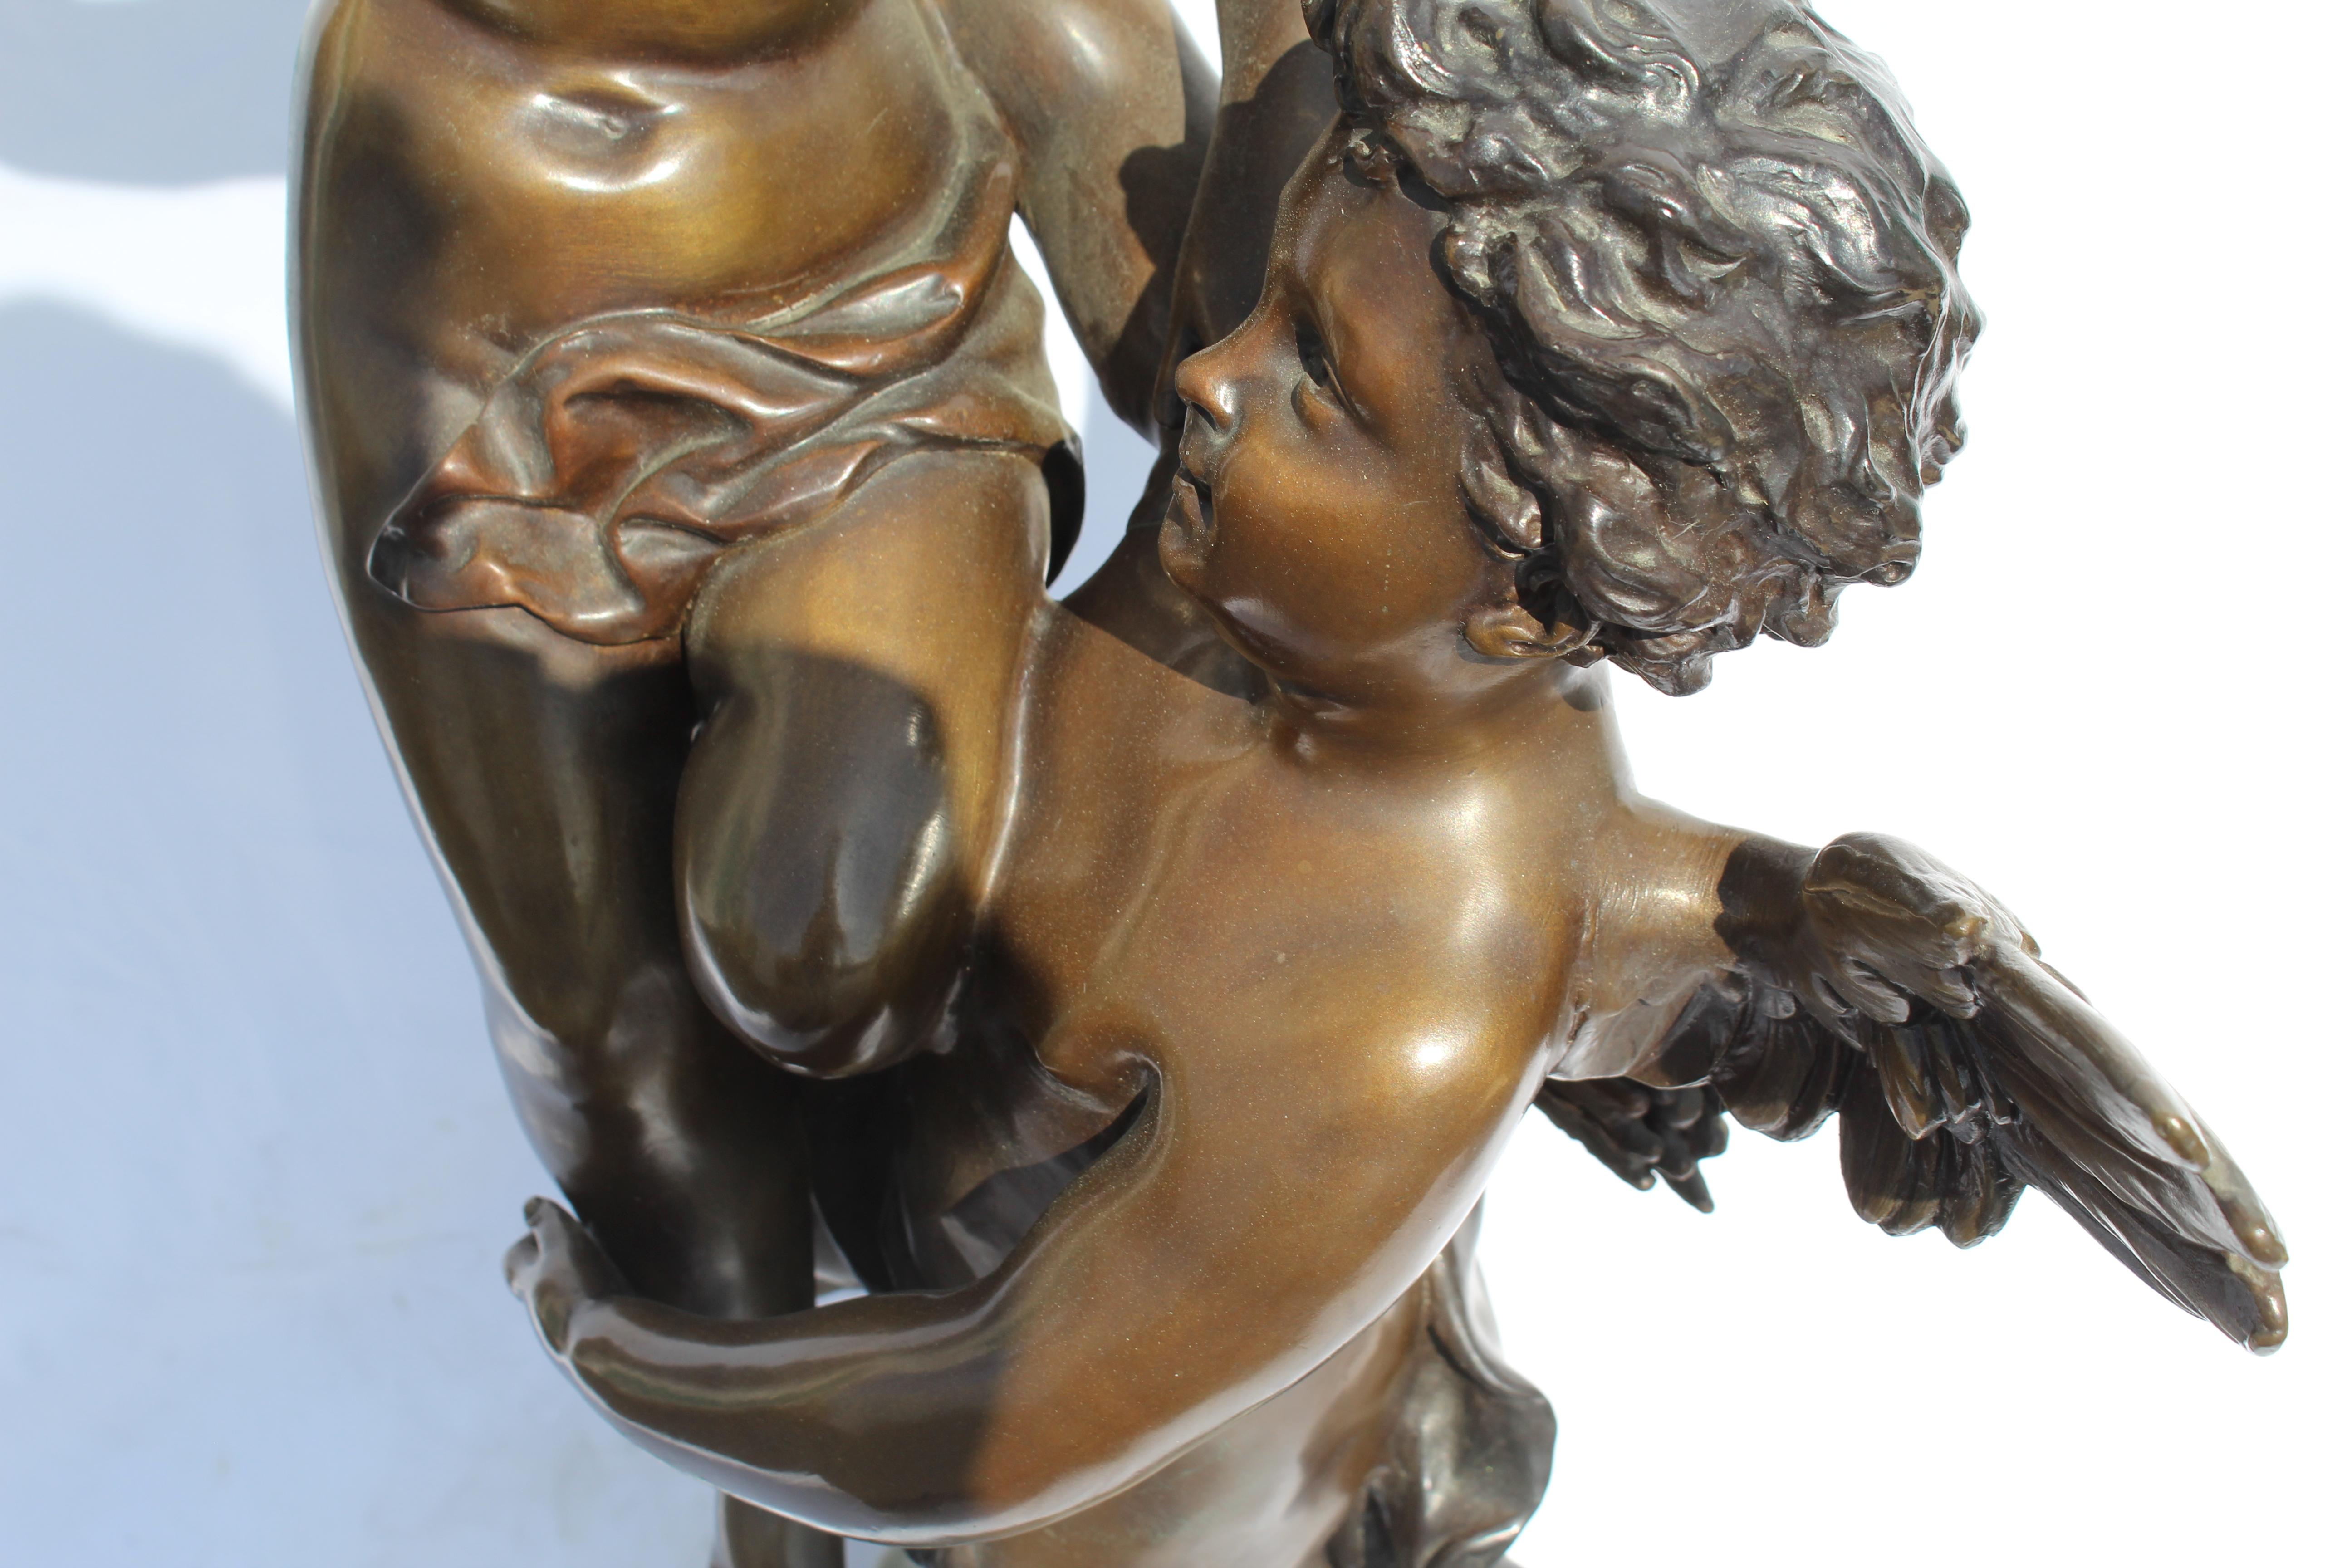 Late 20th Century Art Nouveau Bronze, Double Figures, Large, Title is 'The Triumphator'